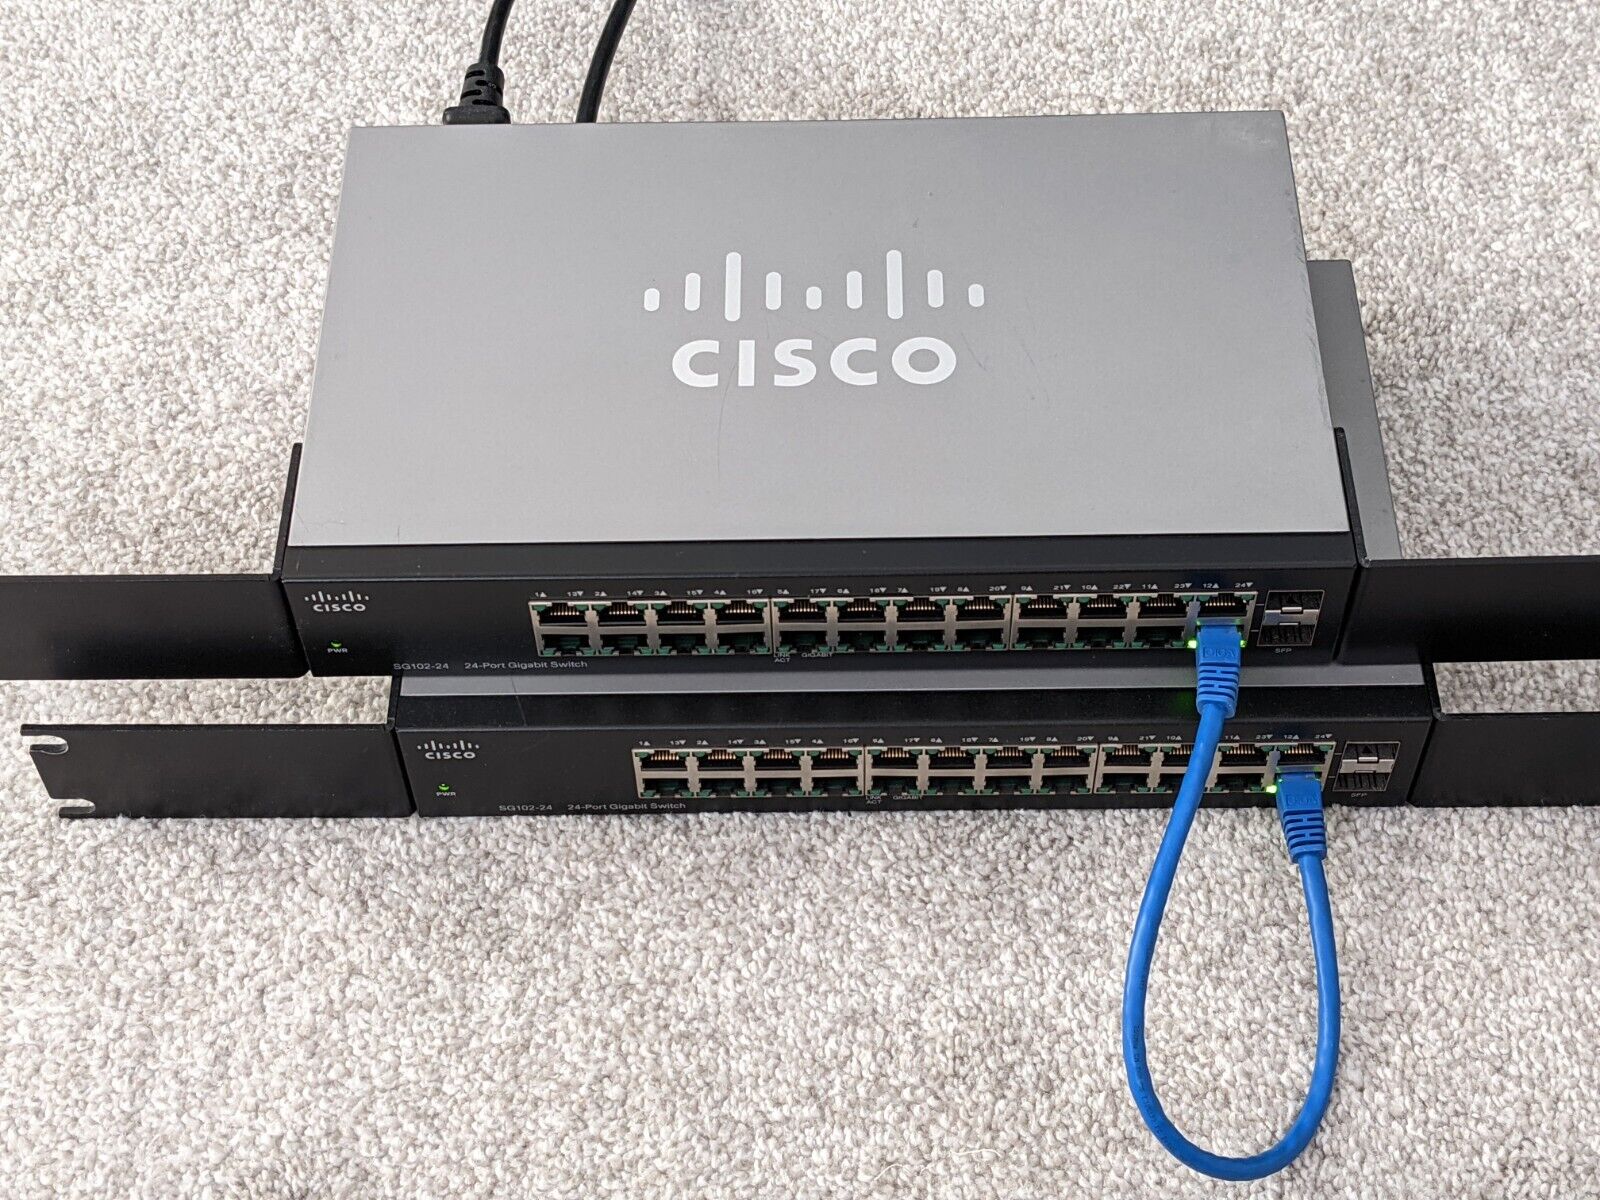 Cisco sg102-24 v2 Network Switch - Lot of 2